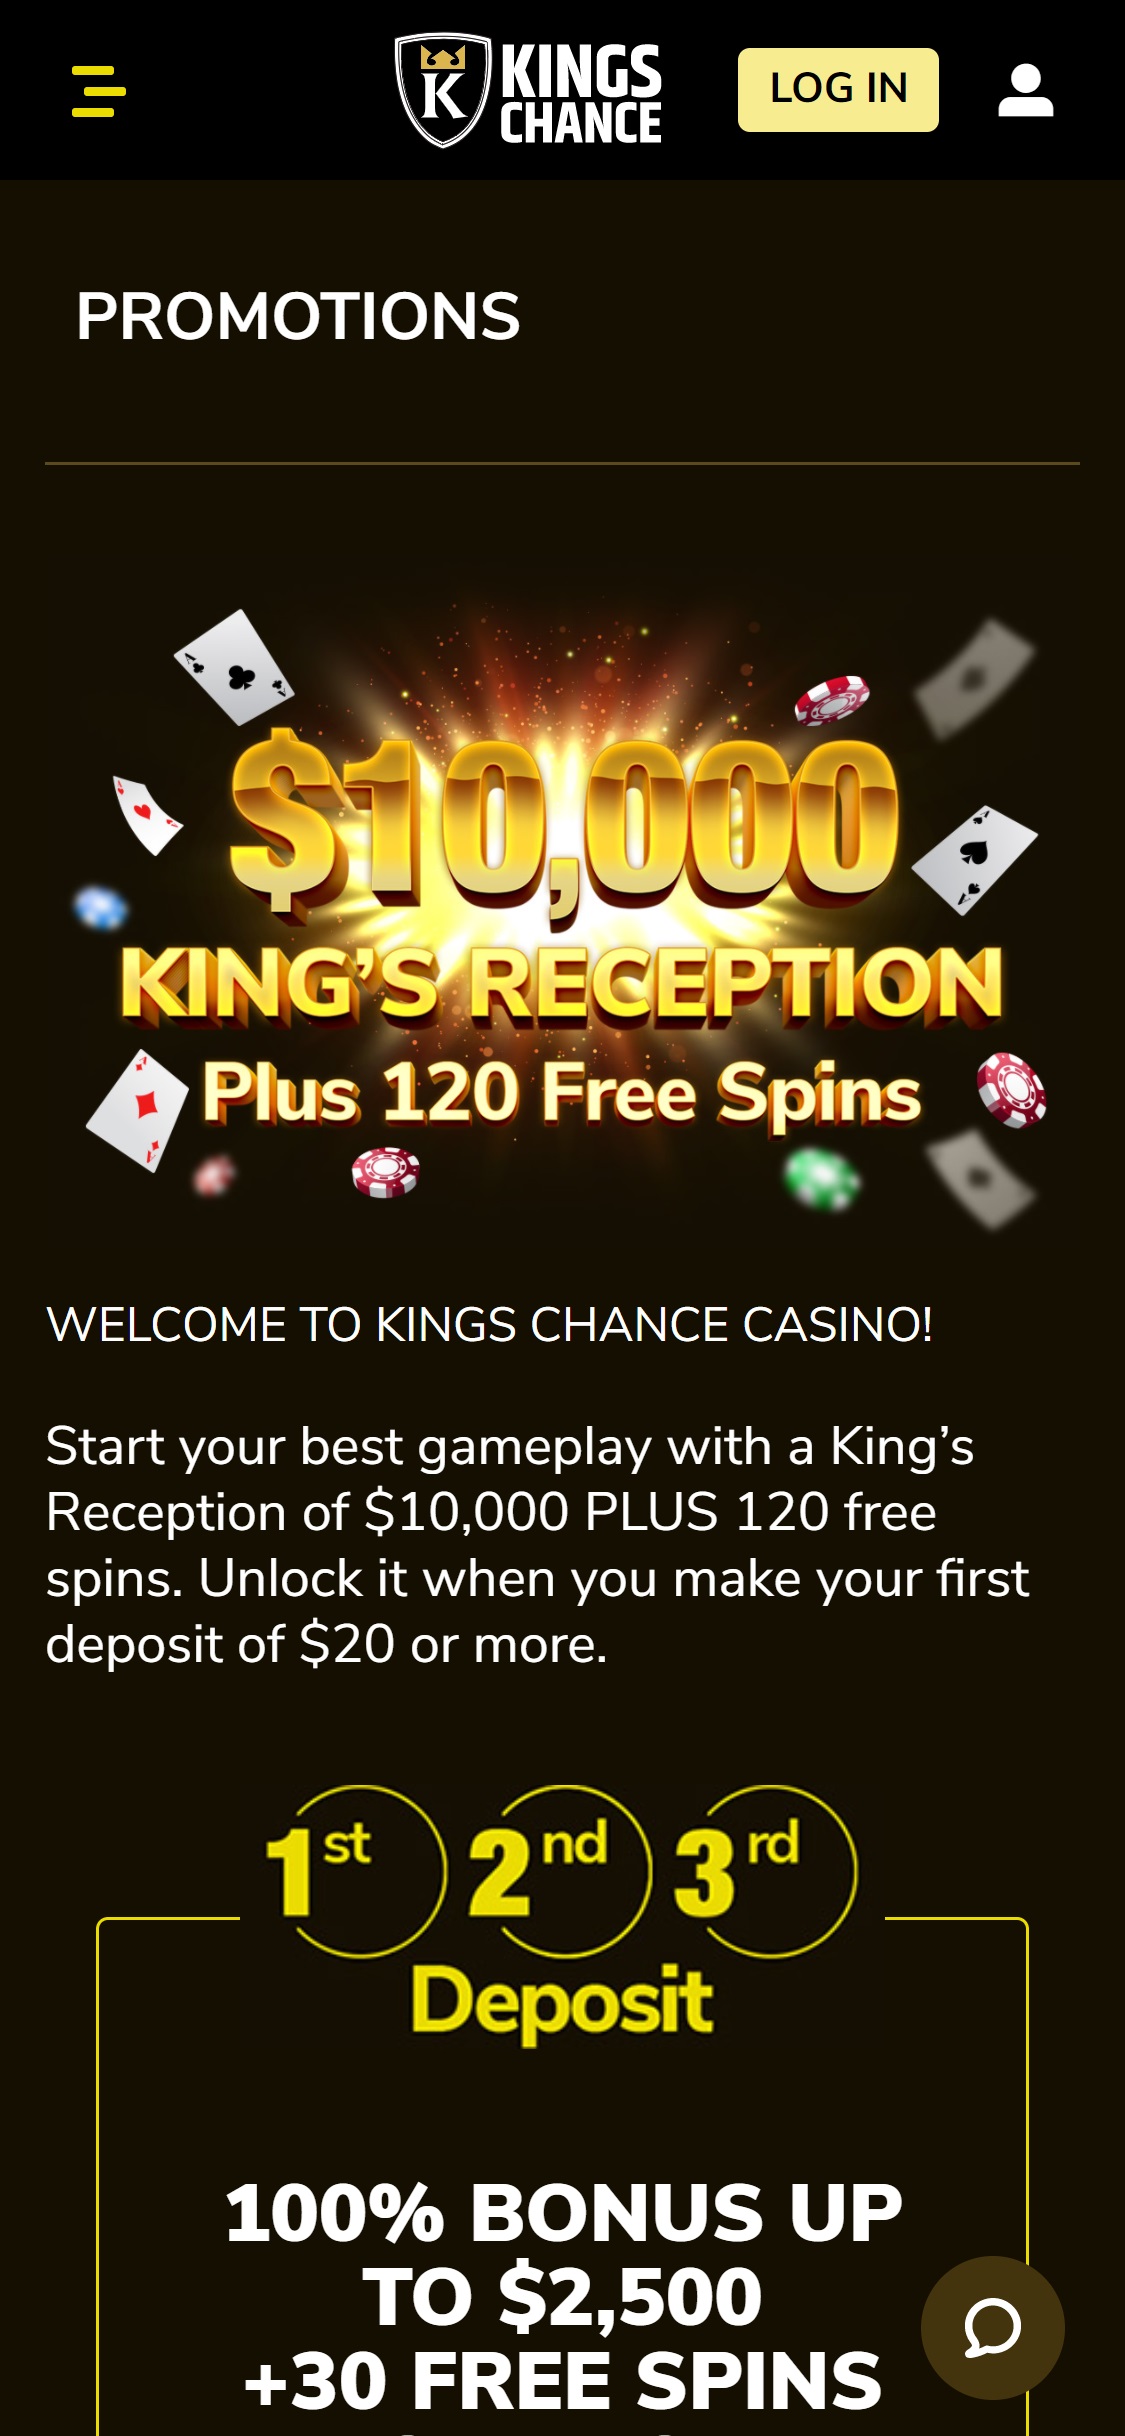 Kings Chance Casino Mobile No Deposit Bonus Review